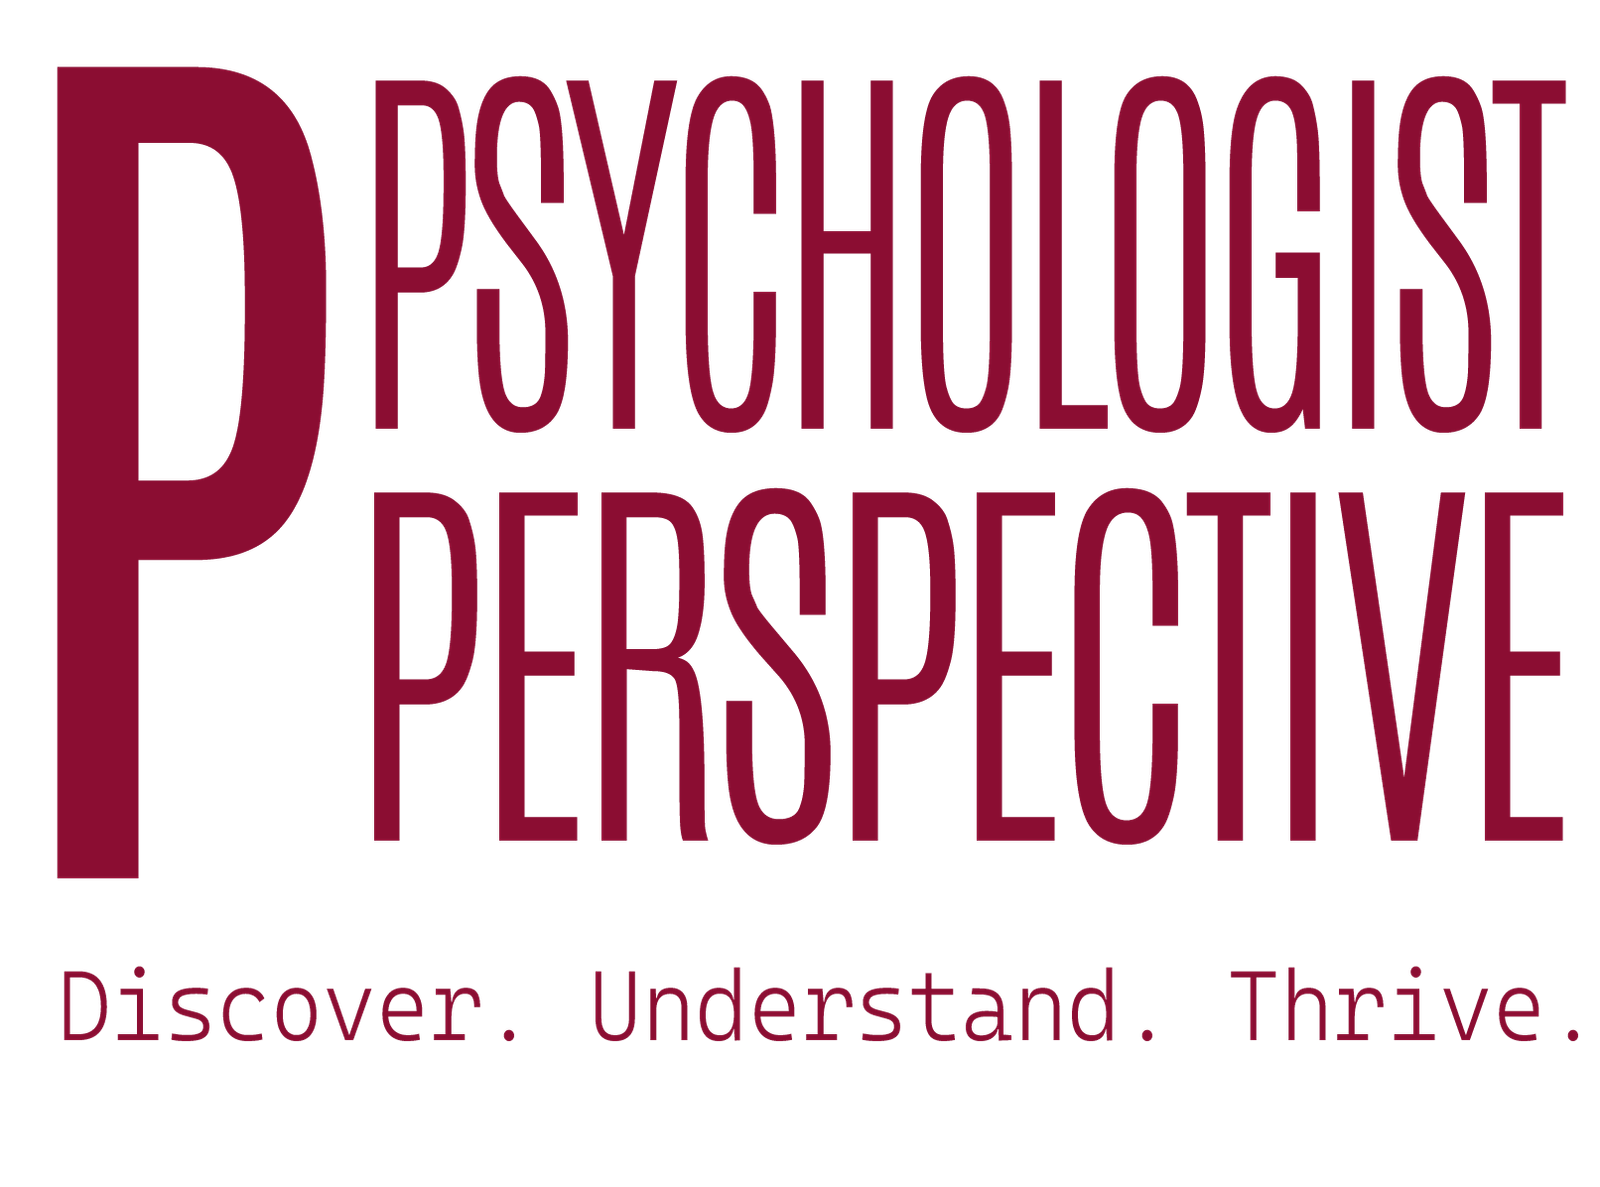 Psychologist Perspective